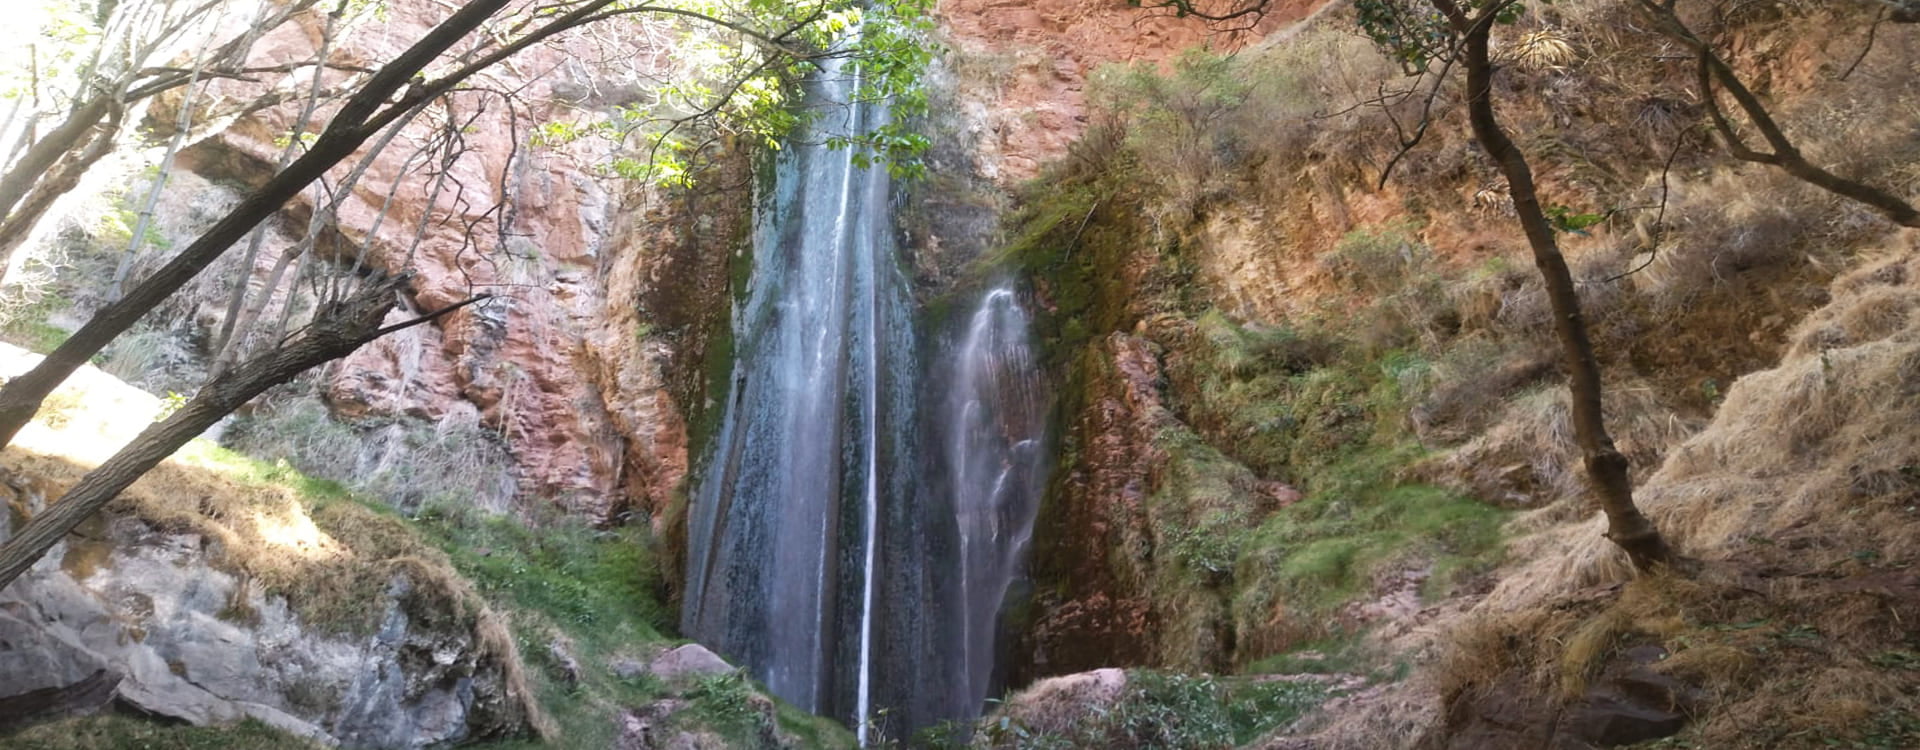 Catarata de Perolniyoc - inca quarry